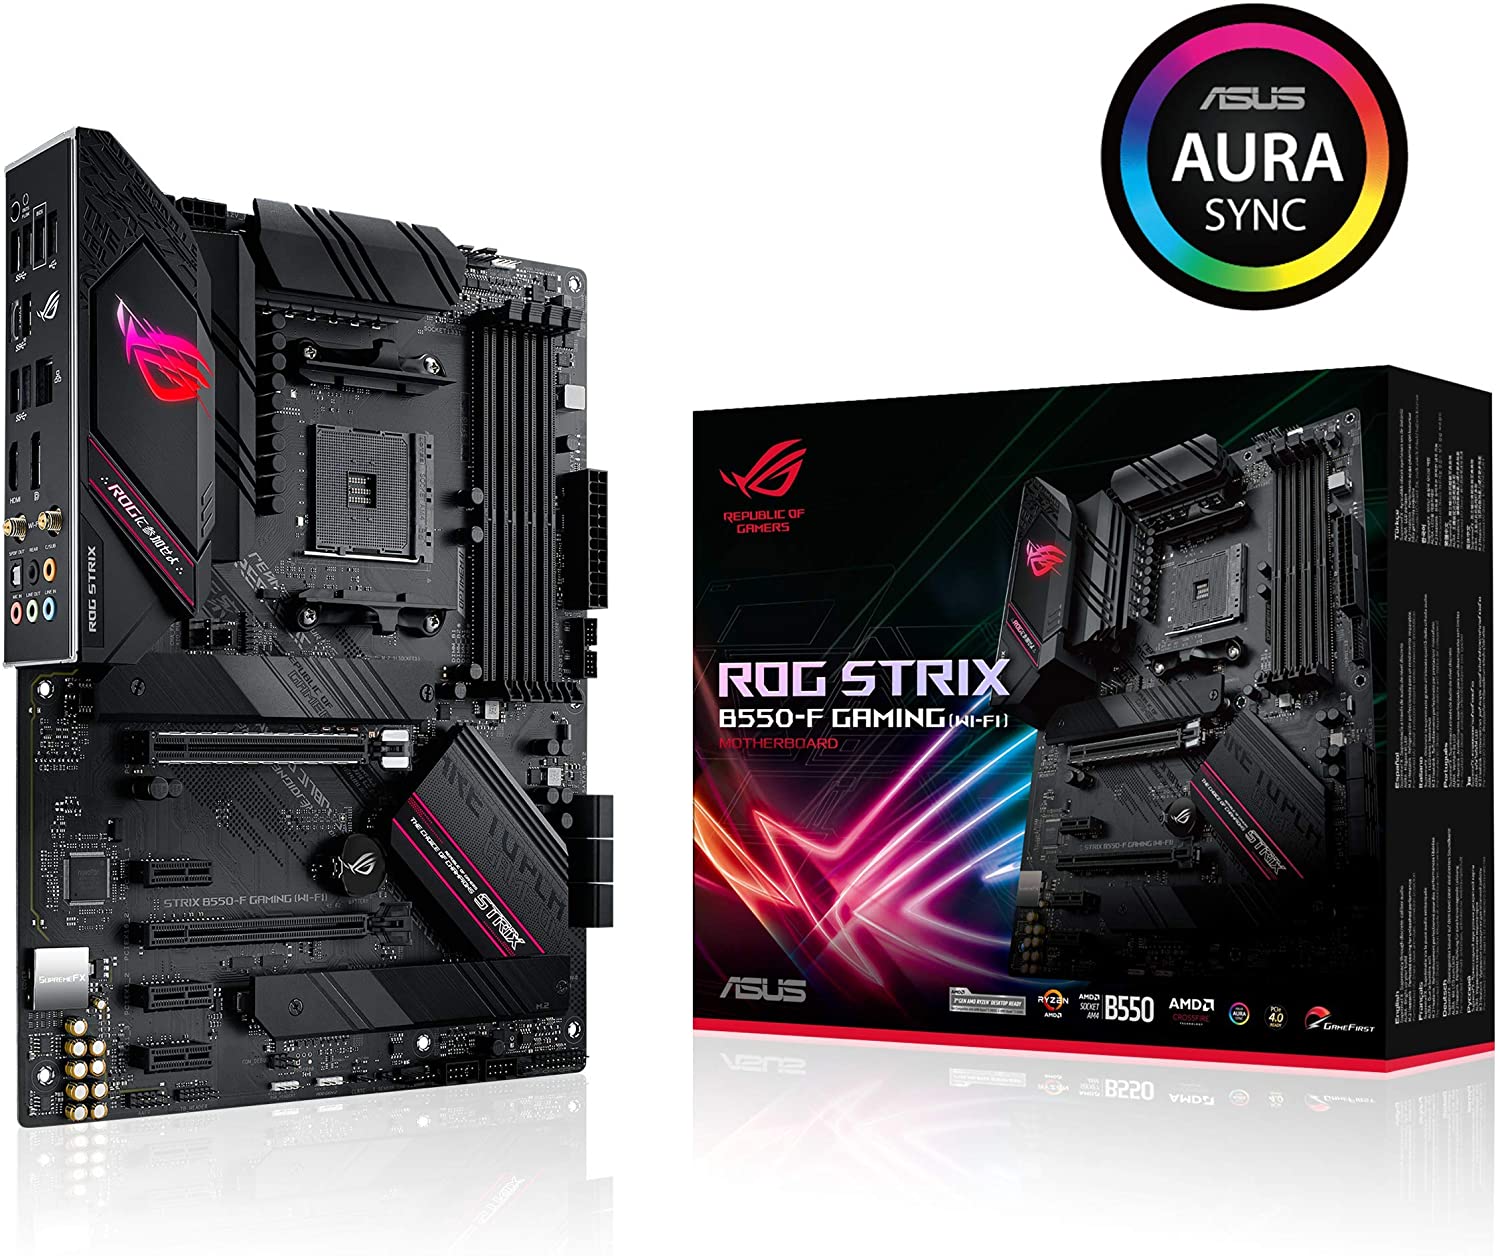 ASUS ROG STRIX B550-F GAMING (WIFI) AMD AM4 ATX MOTHERBOARD